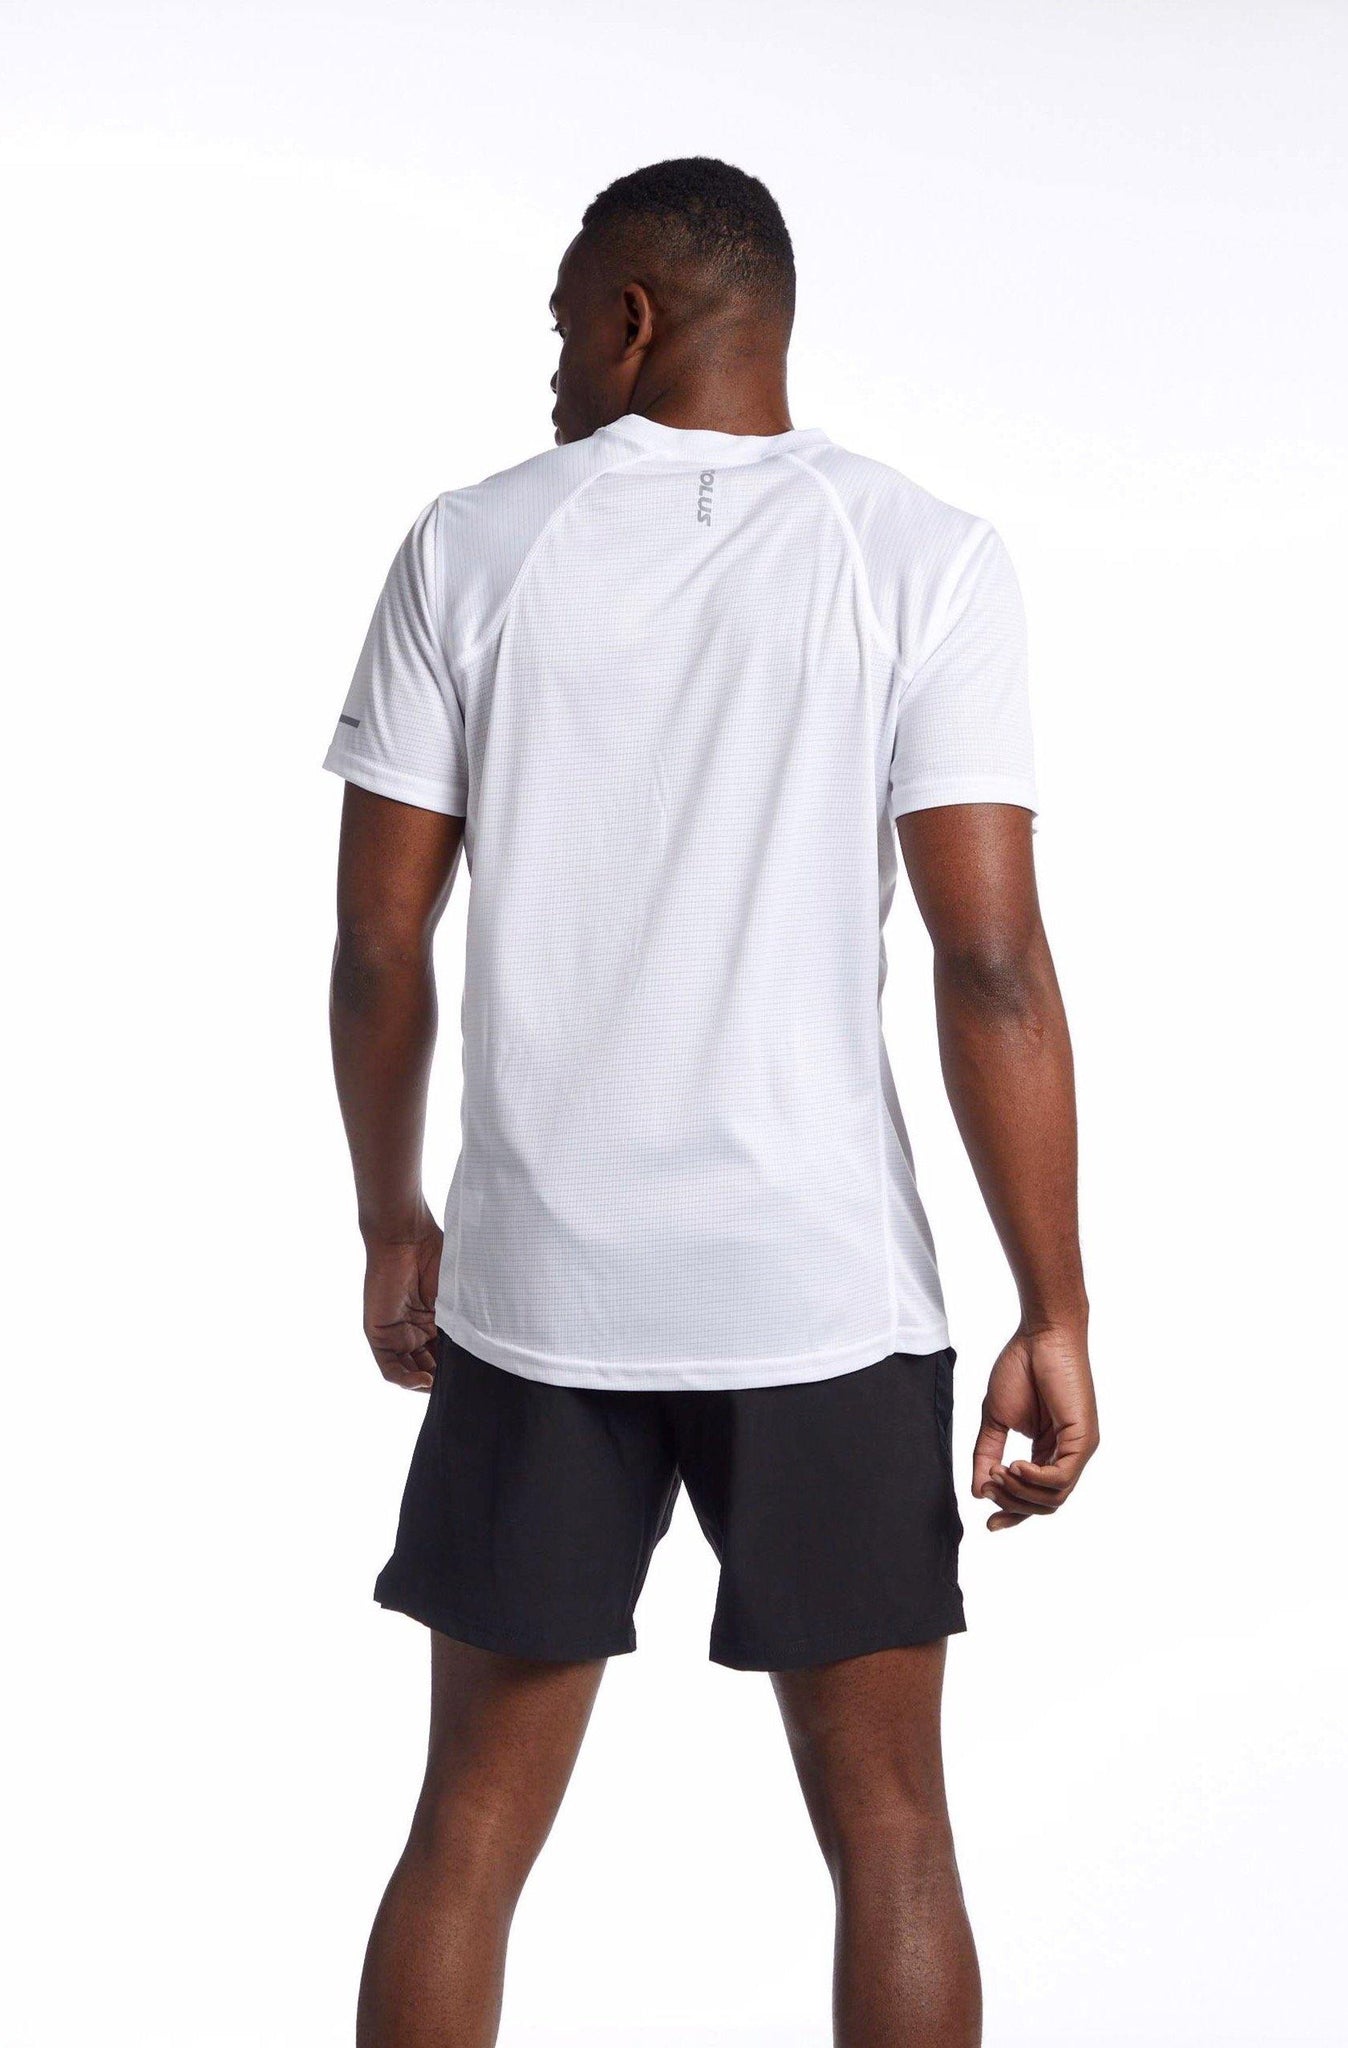 AERATE RUSH Fitted Running T-Shirt - Solus